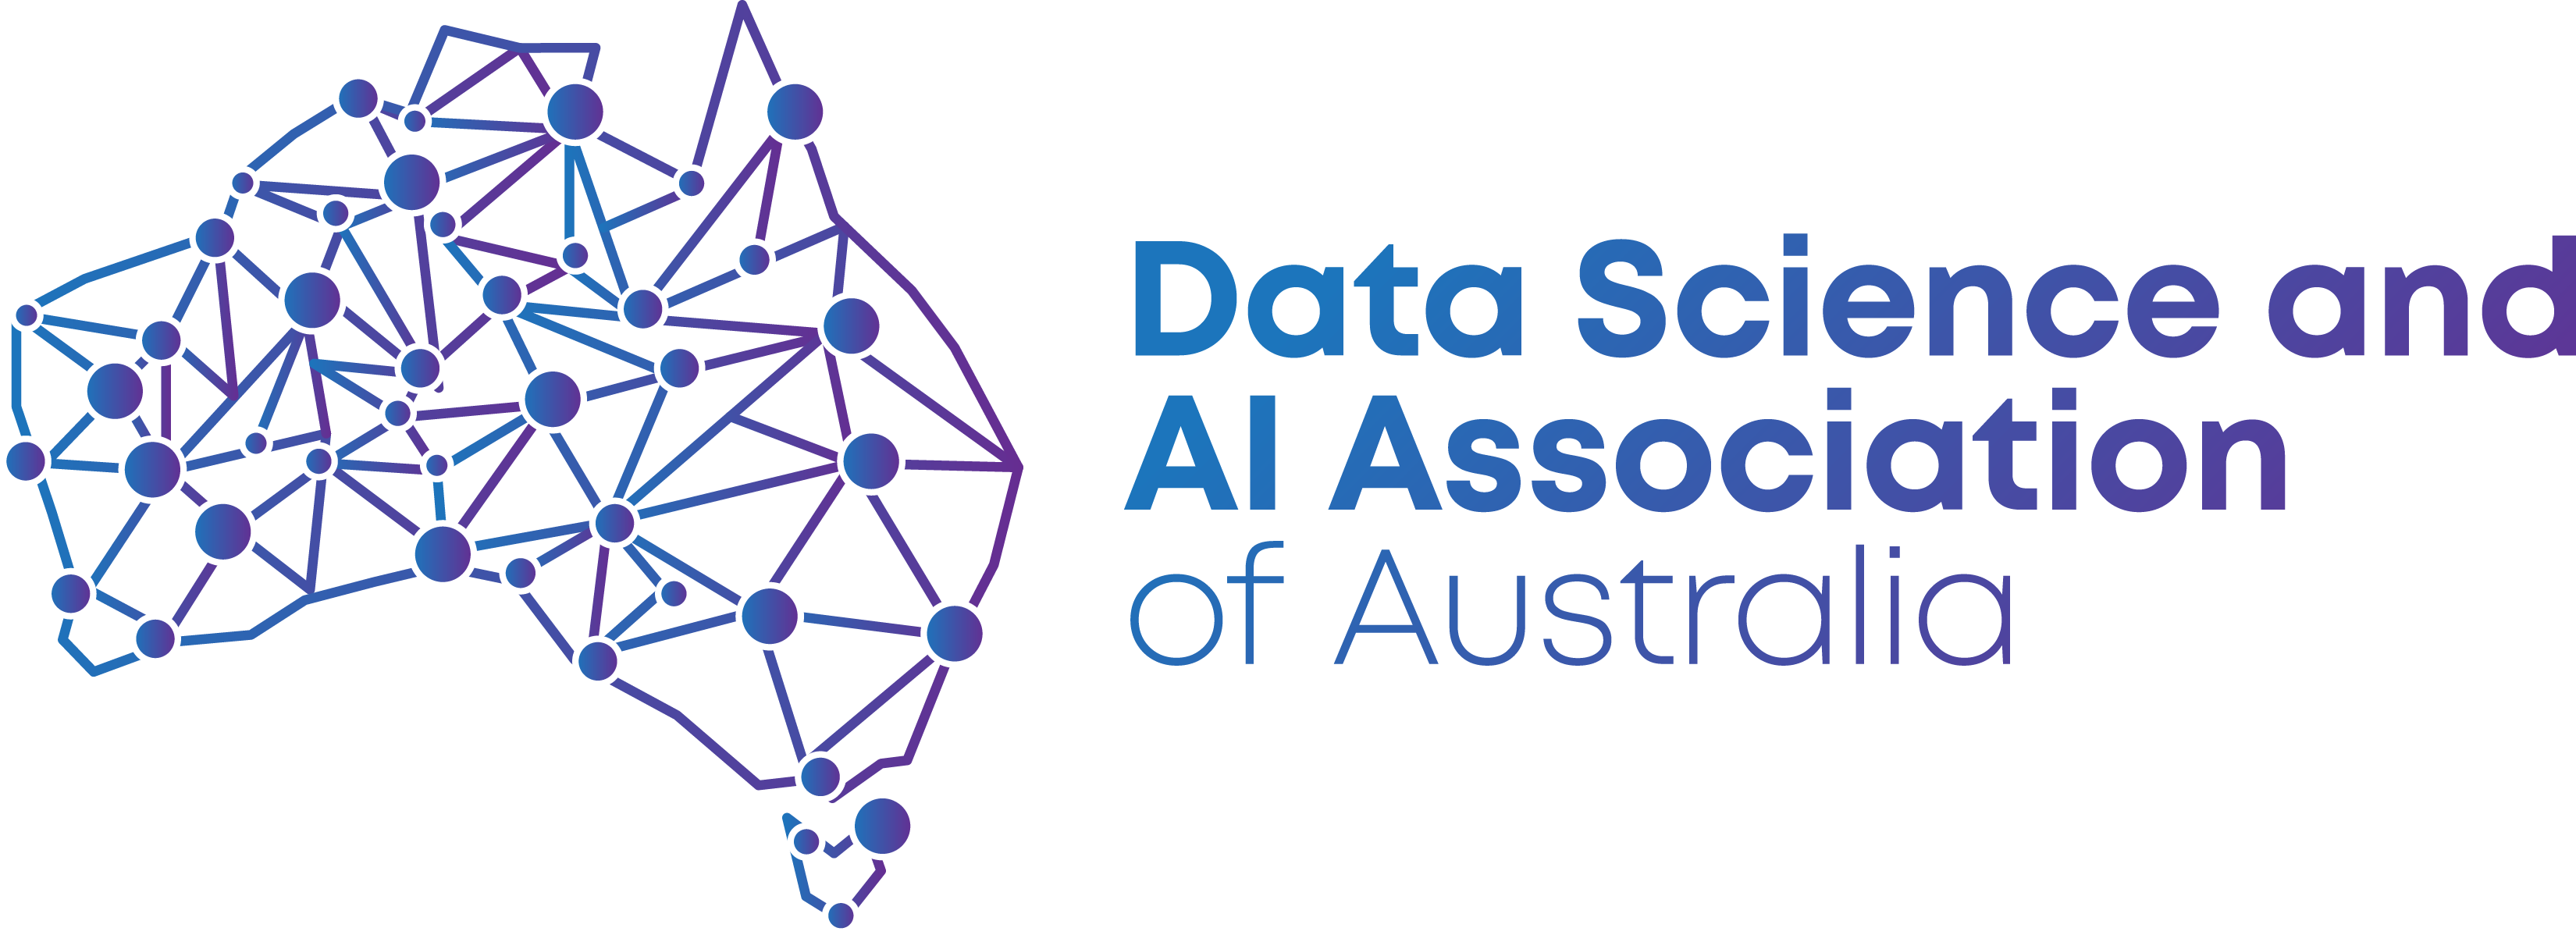 Data Science and AI Association of Australia